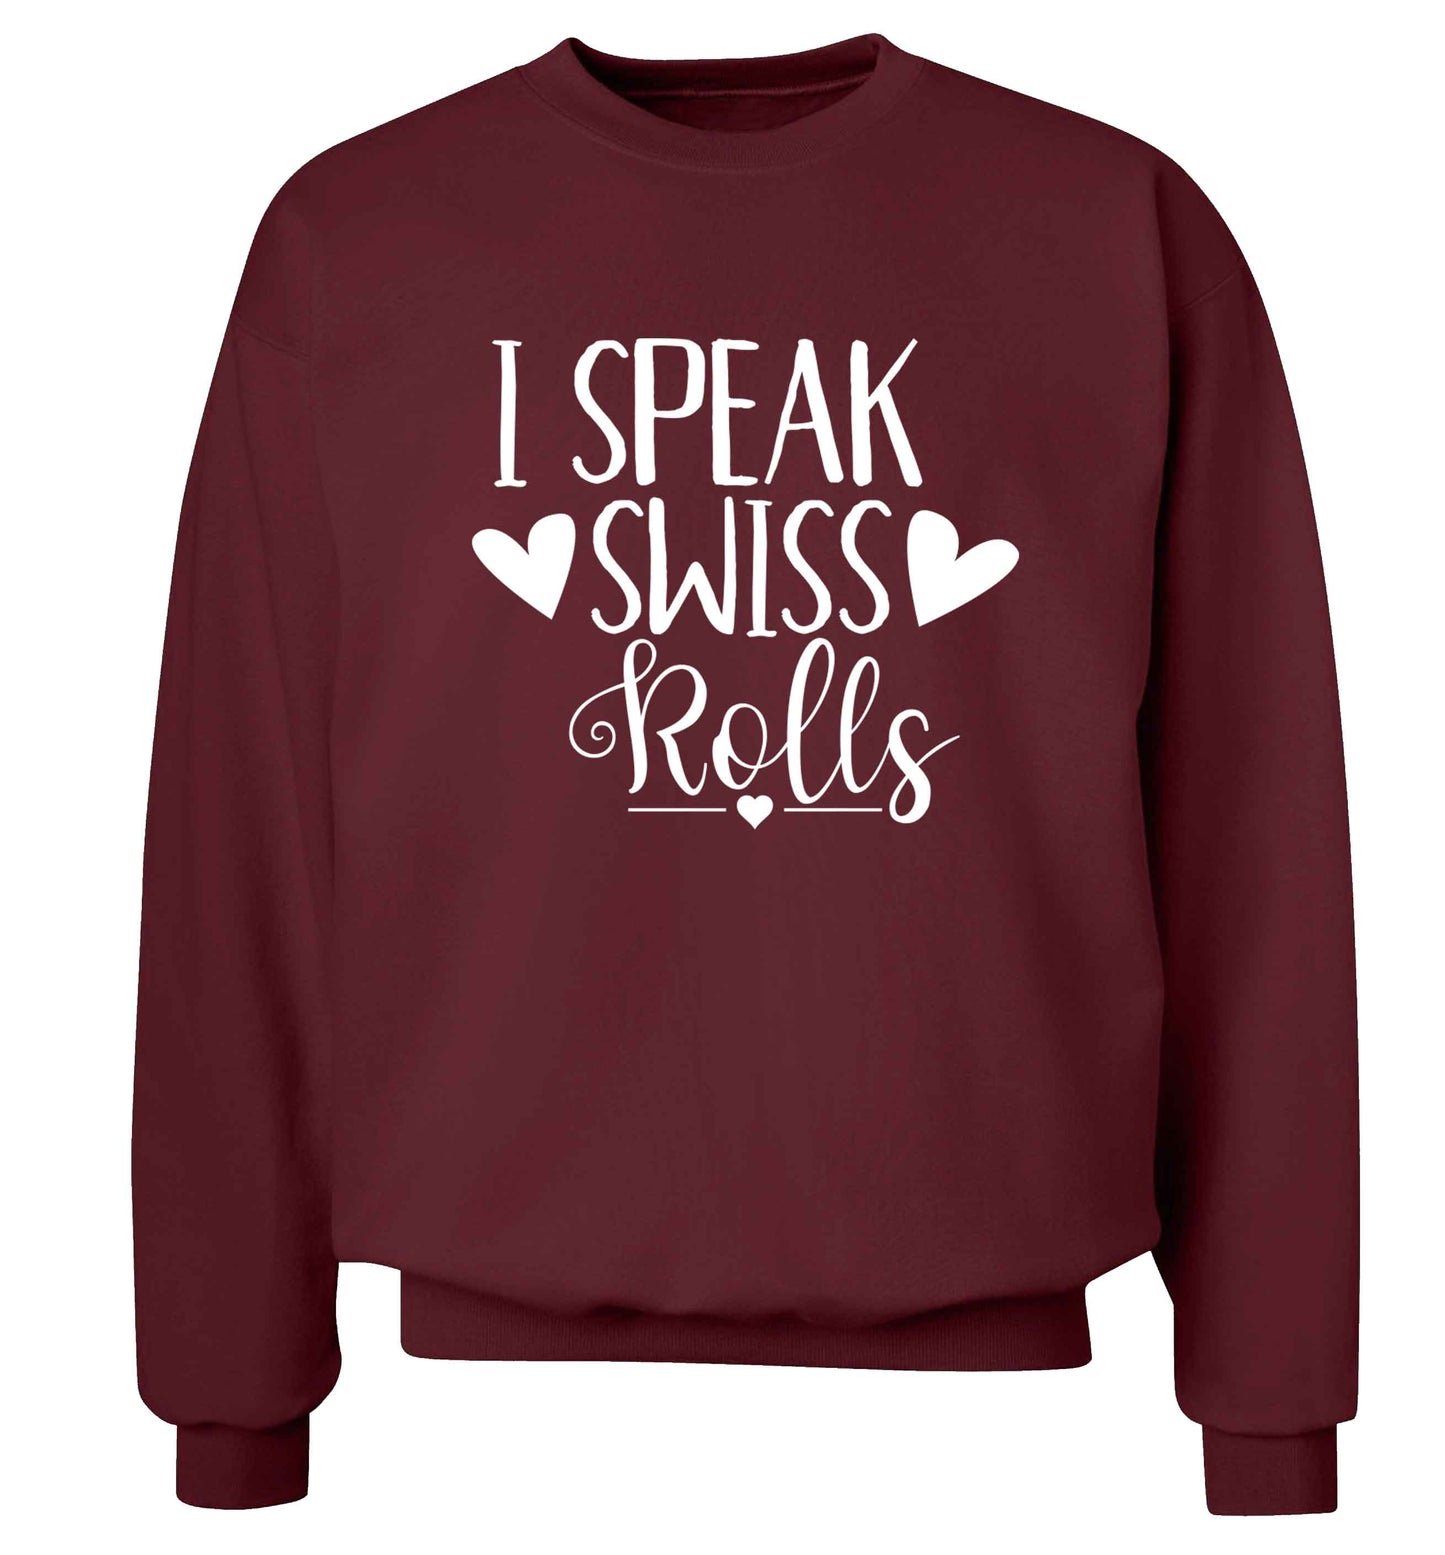 I speak swiss..rolls Adult's unisex maroon Sweater 2XL